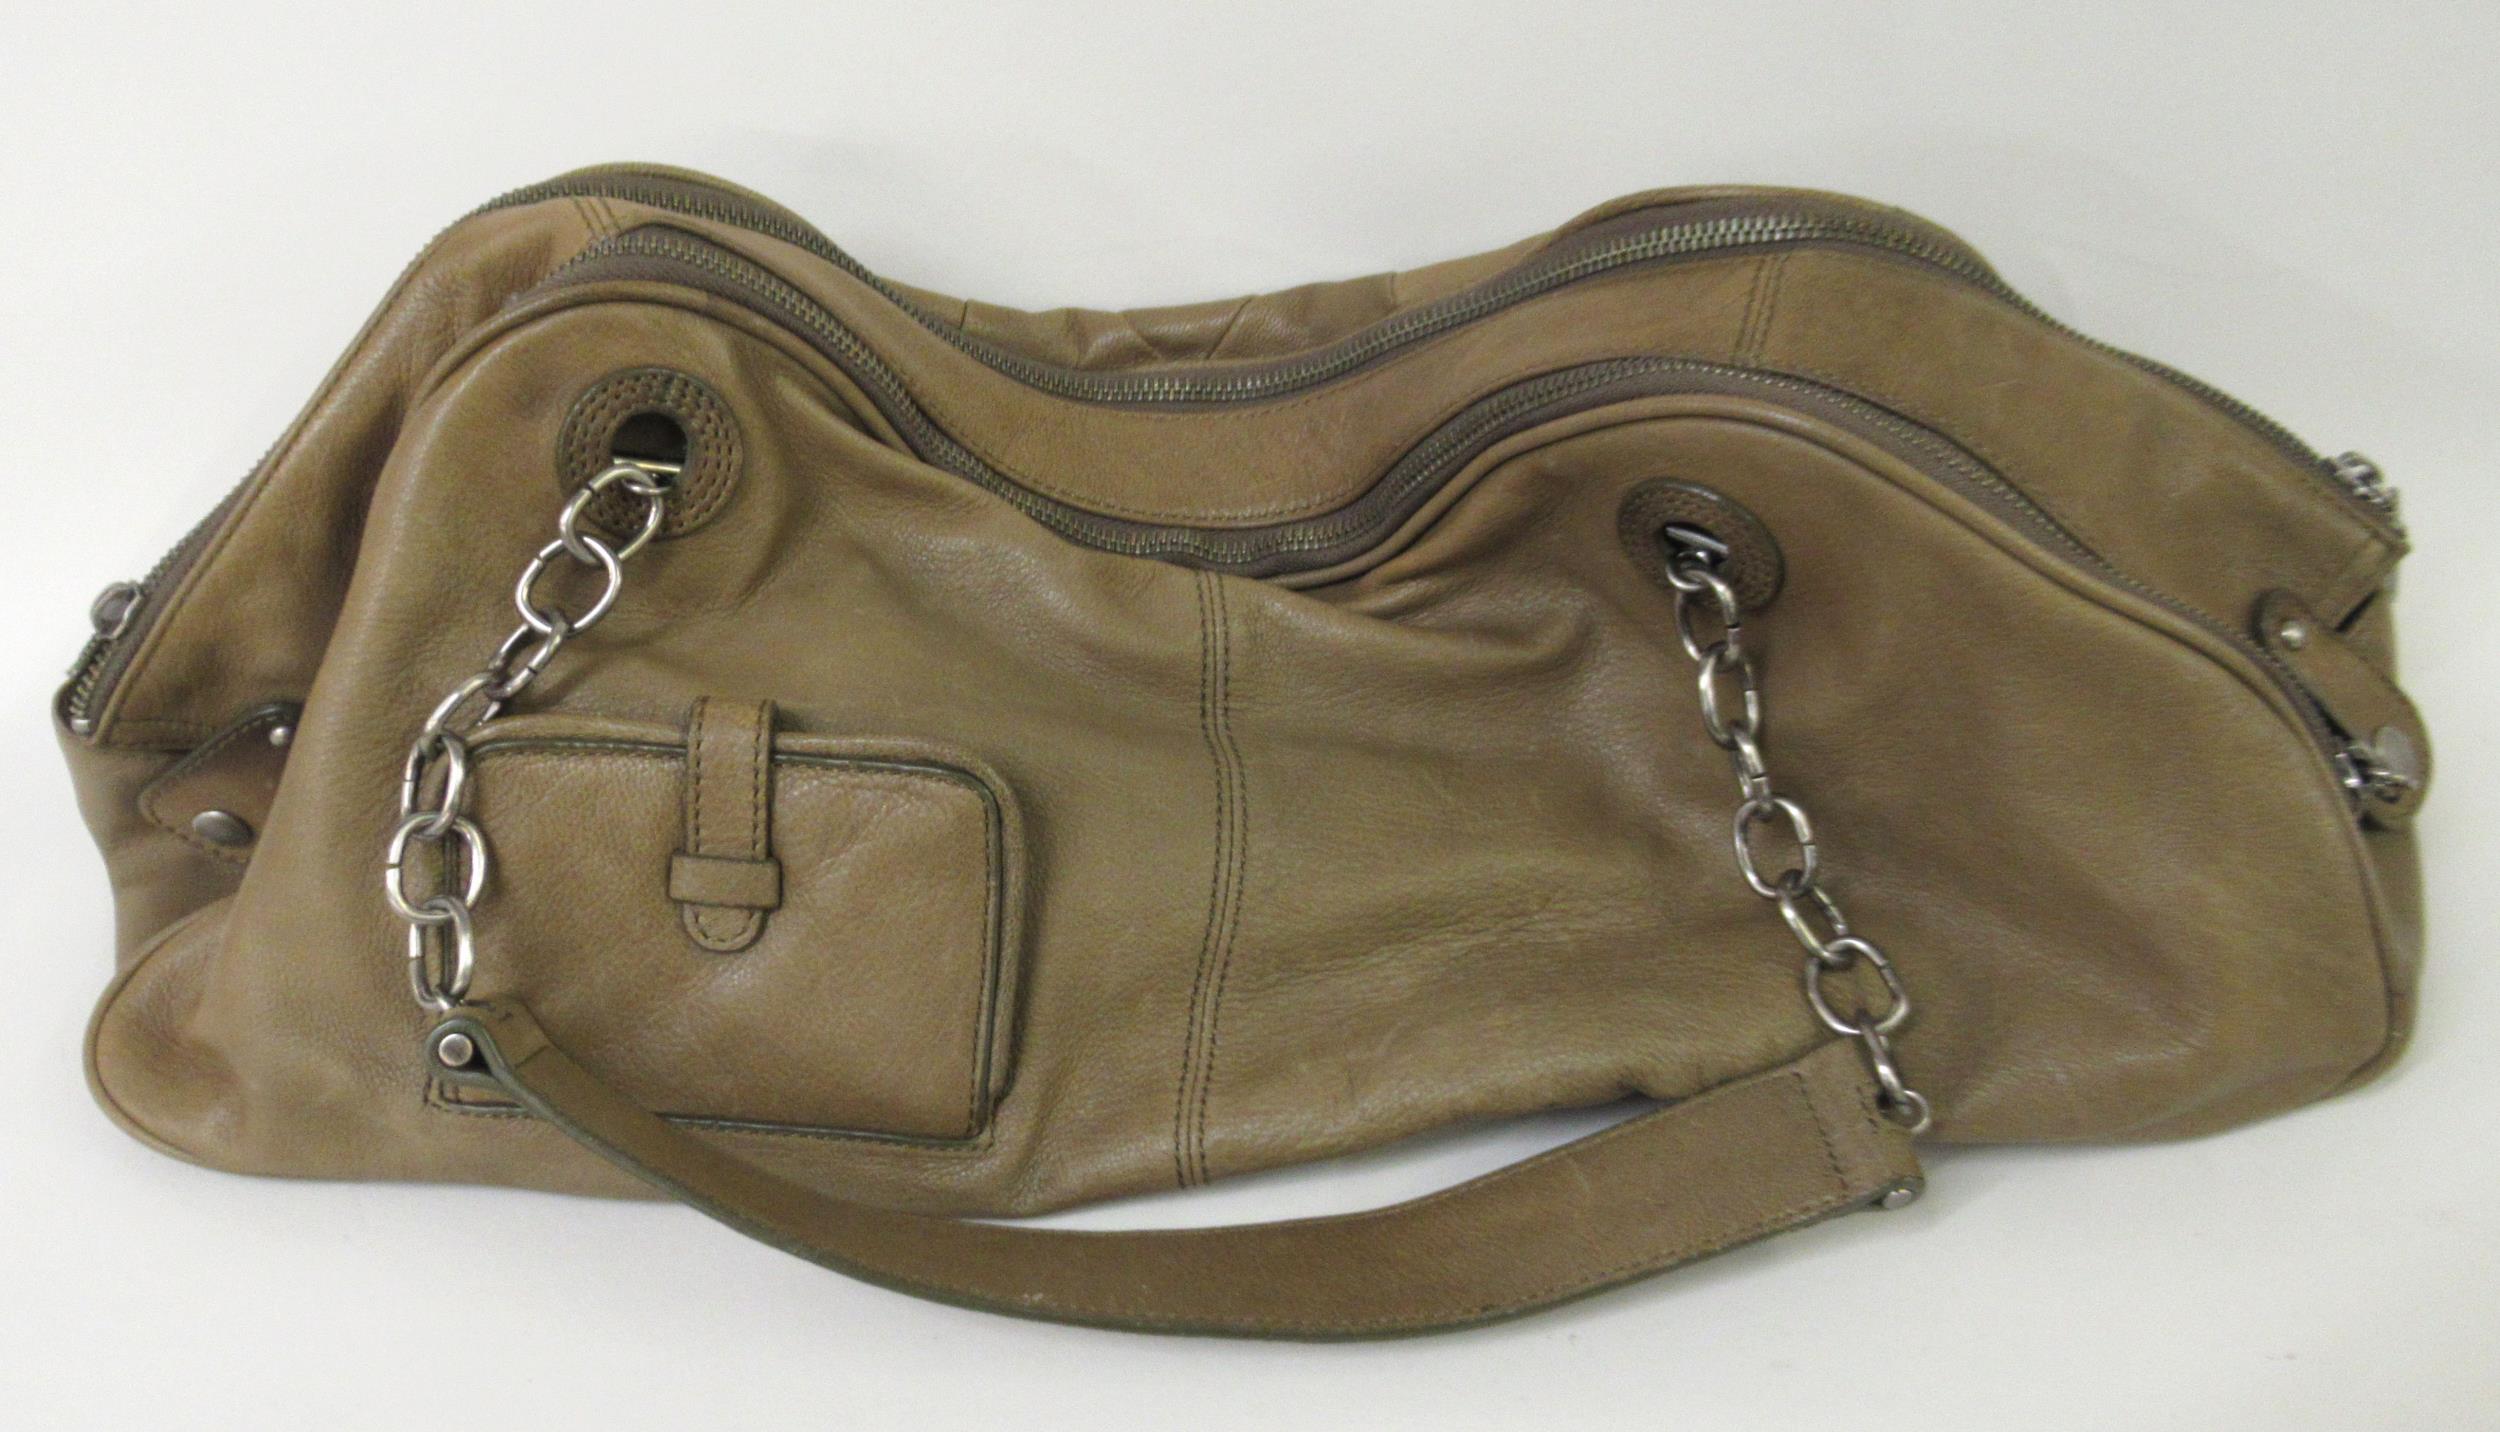 BCBG Max Azria, large green leather shoulder bag One zip tag missing - Image 2 of 9